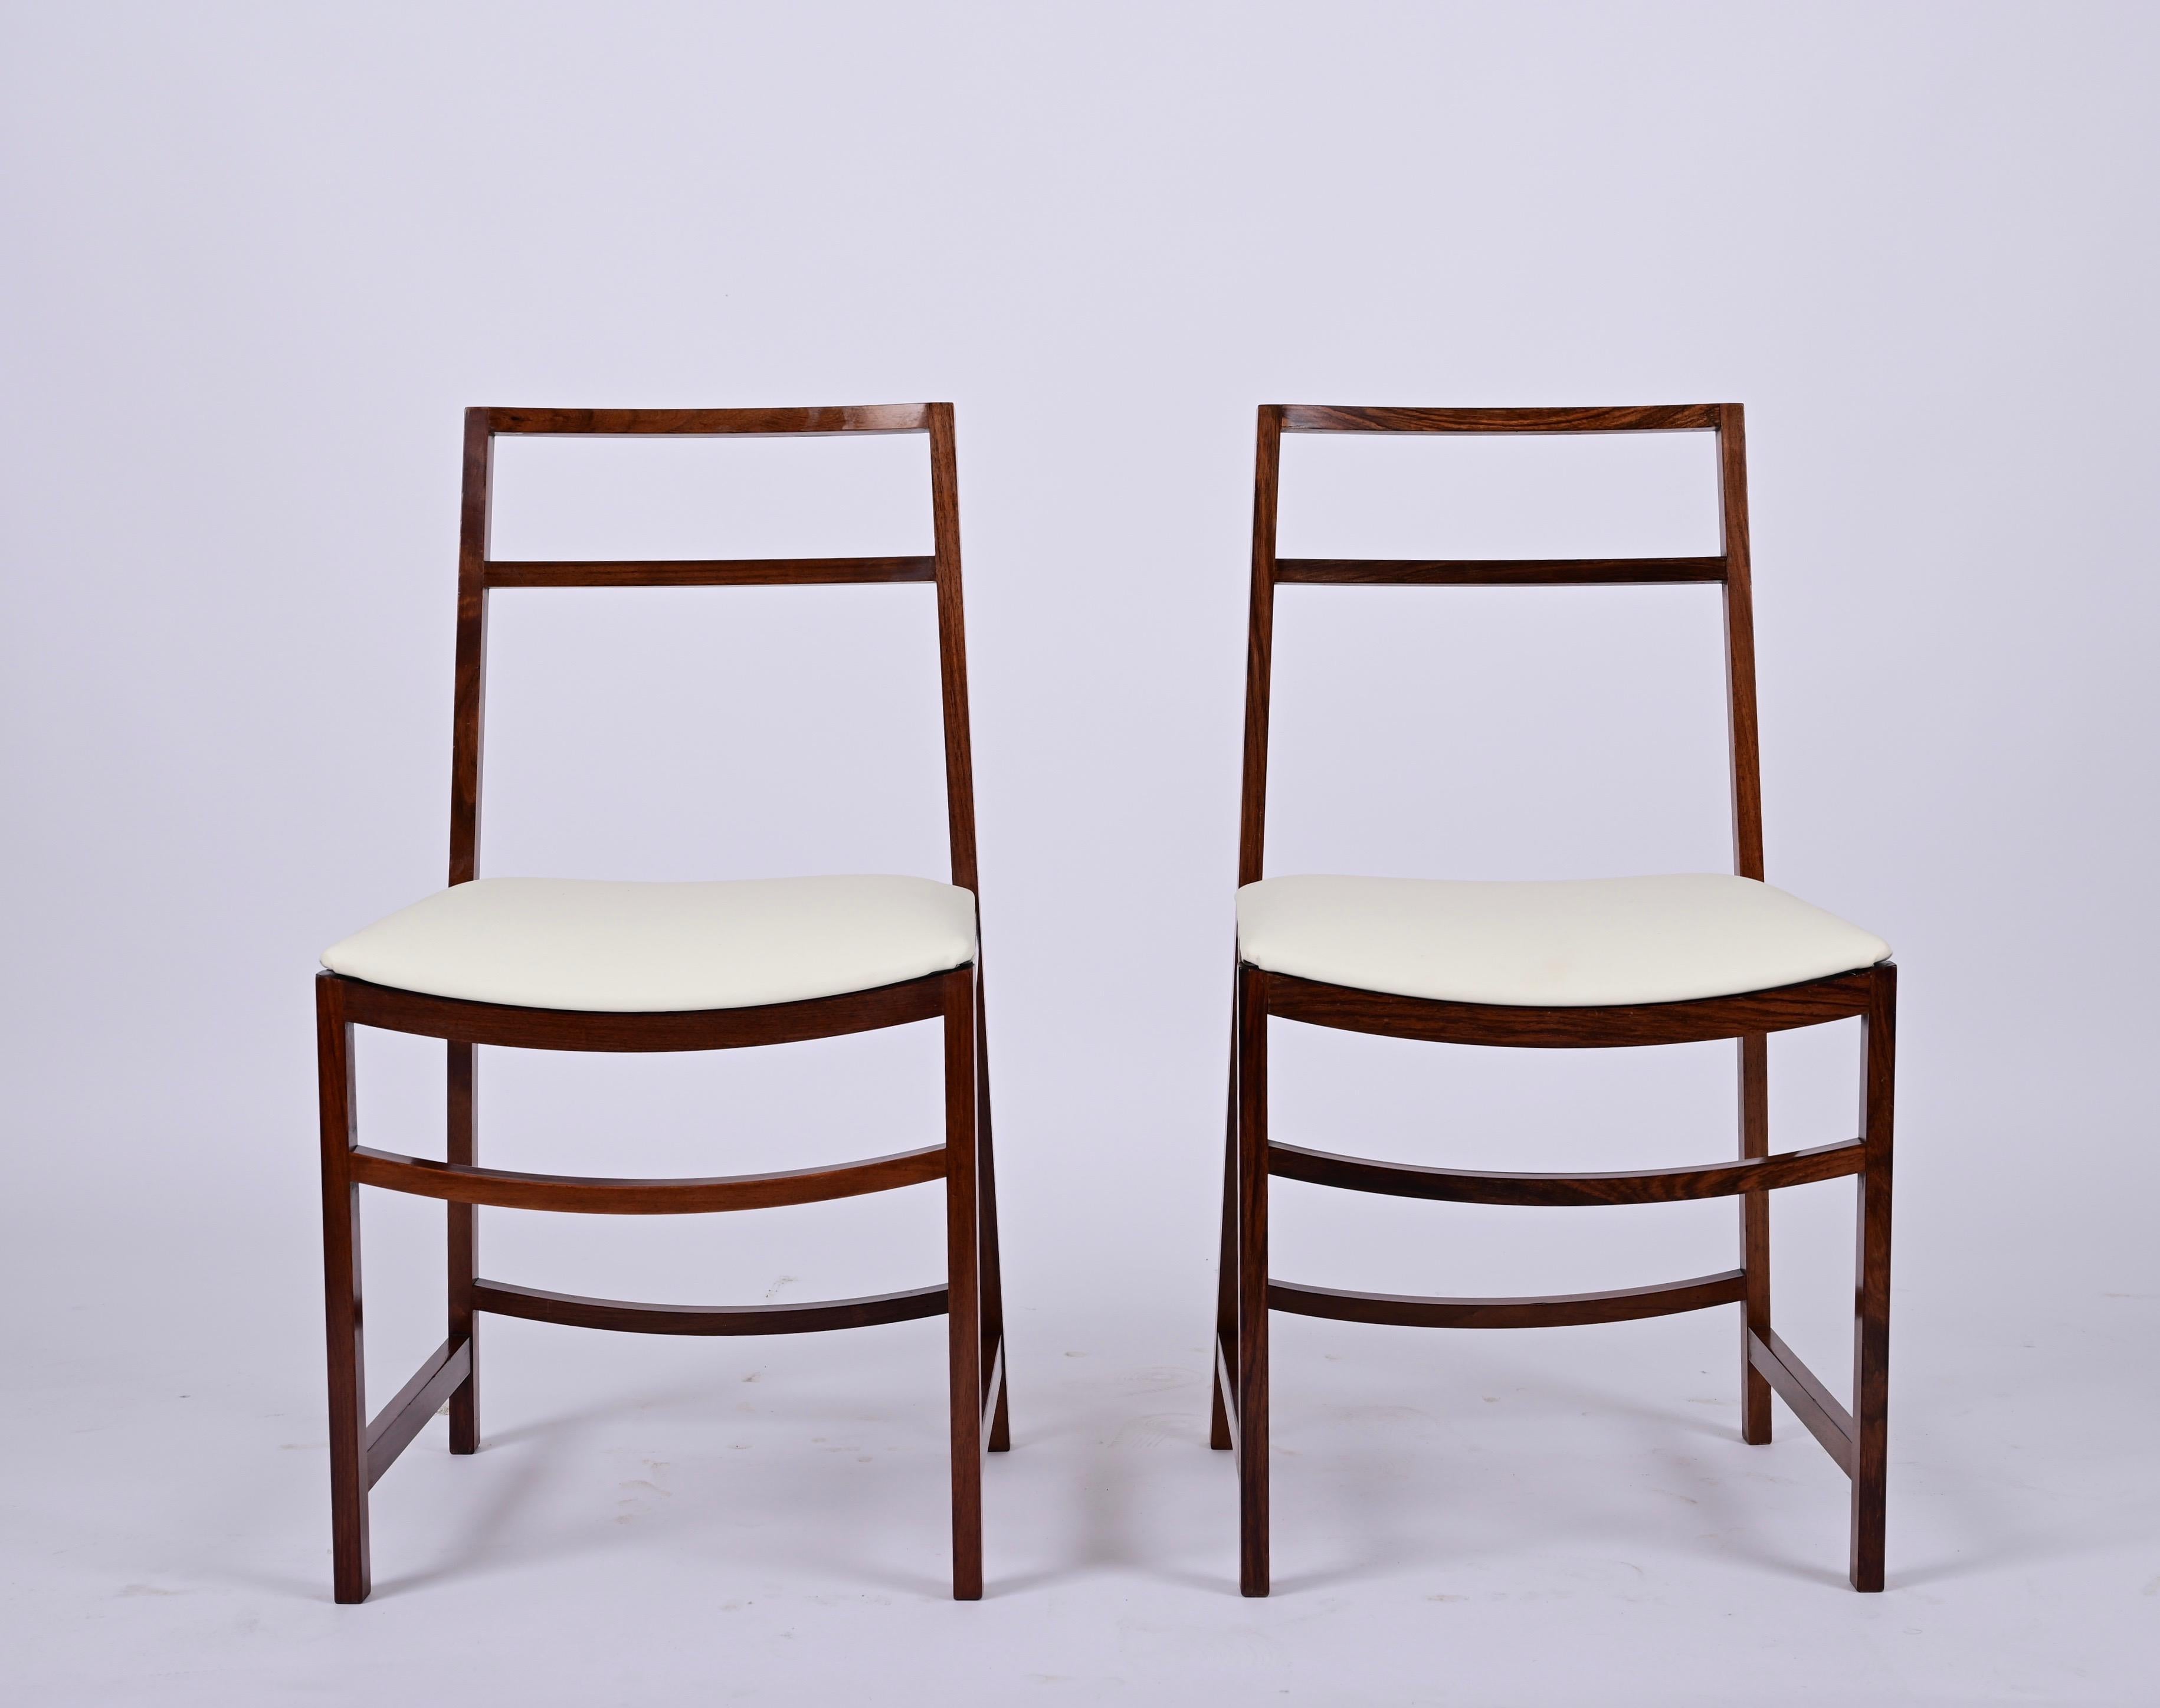 Midcentury Italian Dining Chairs in Teak, Renato Venturi for MIM Roma, 1960s For Sale 8